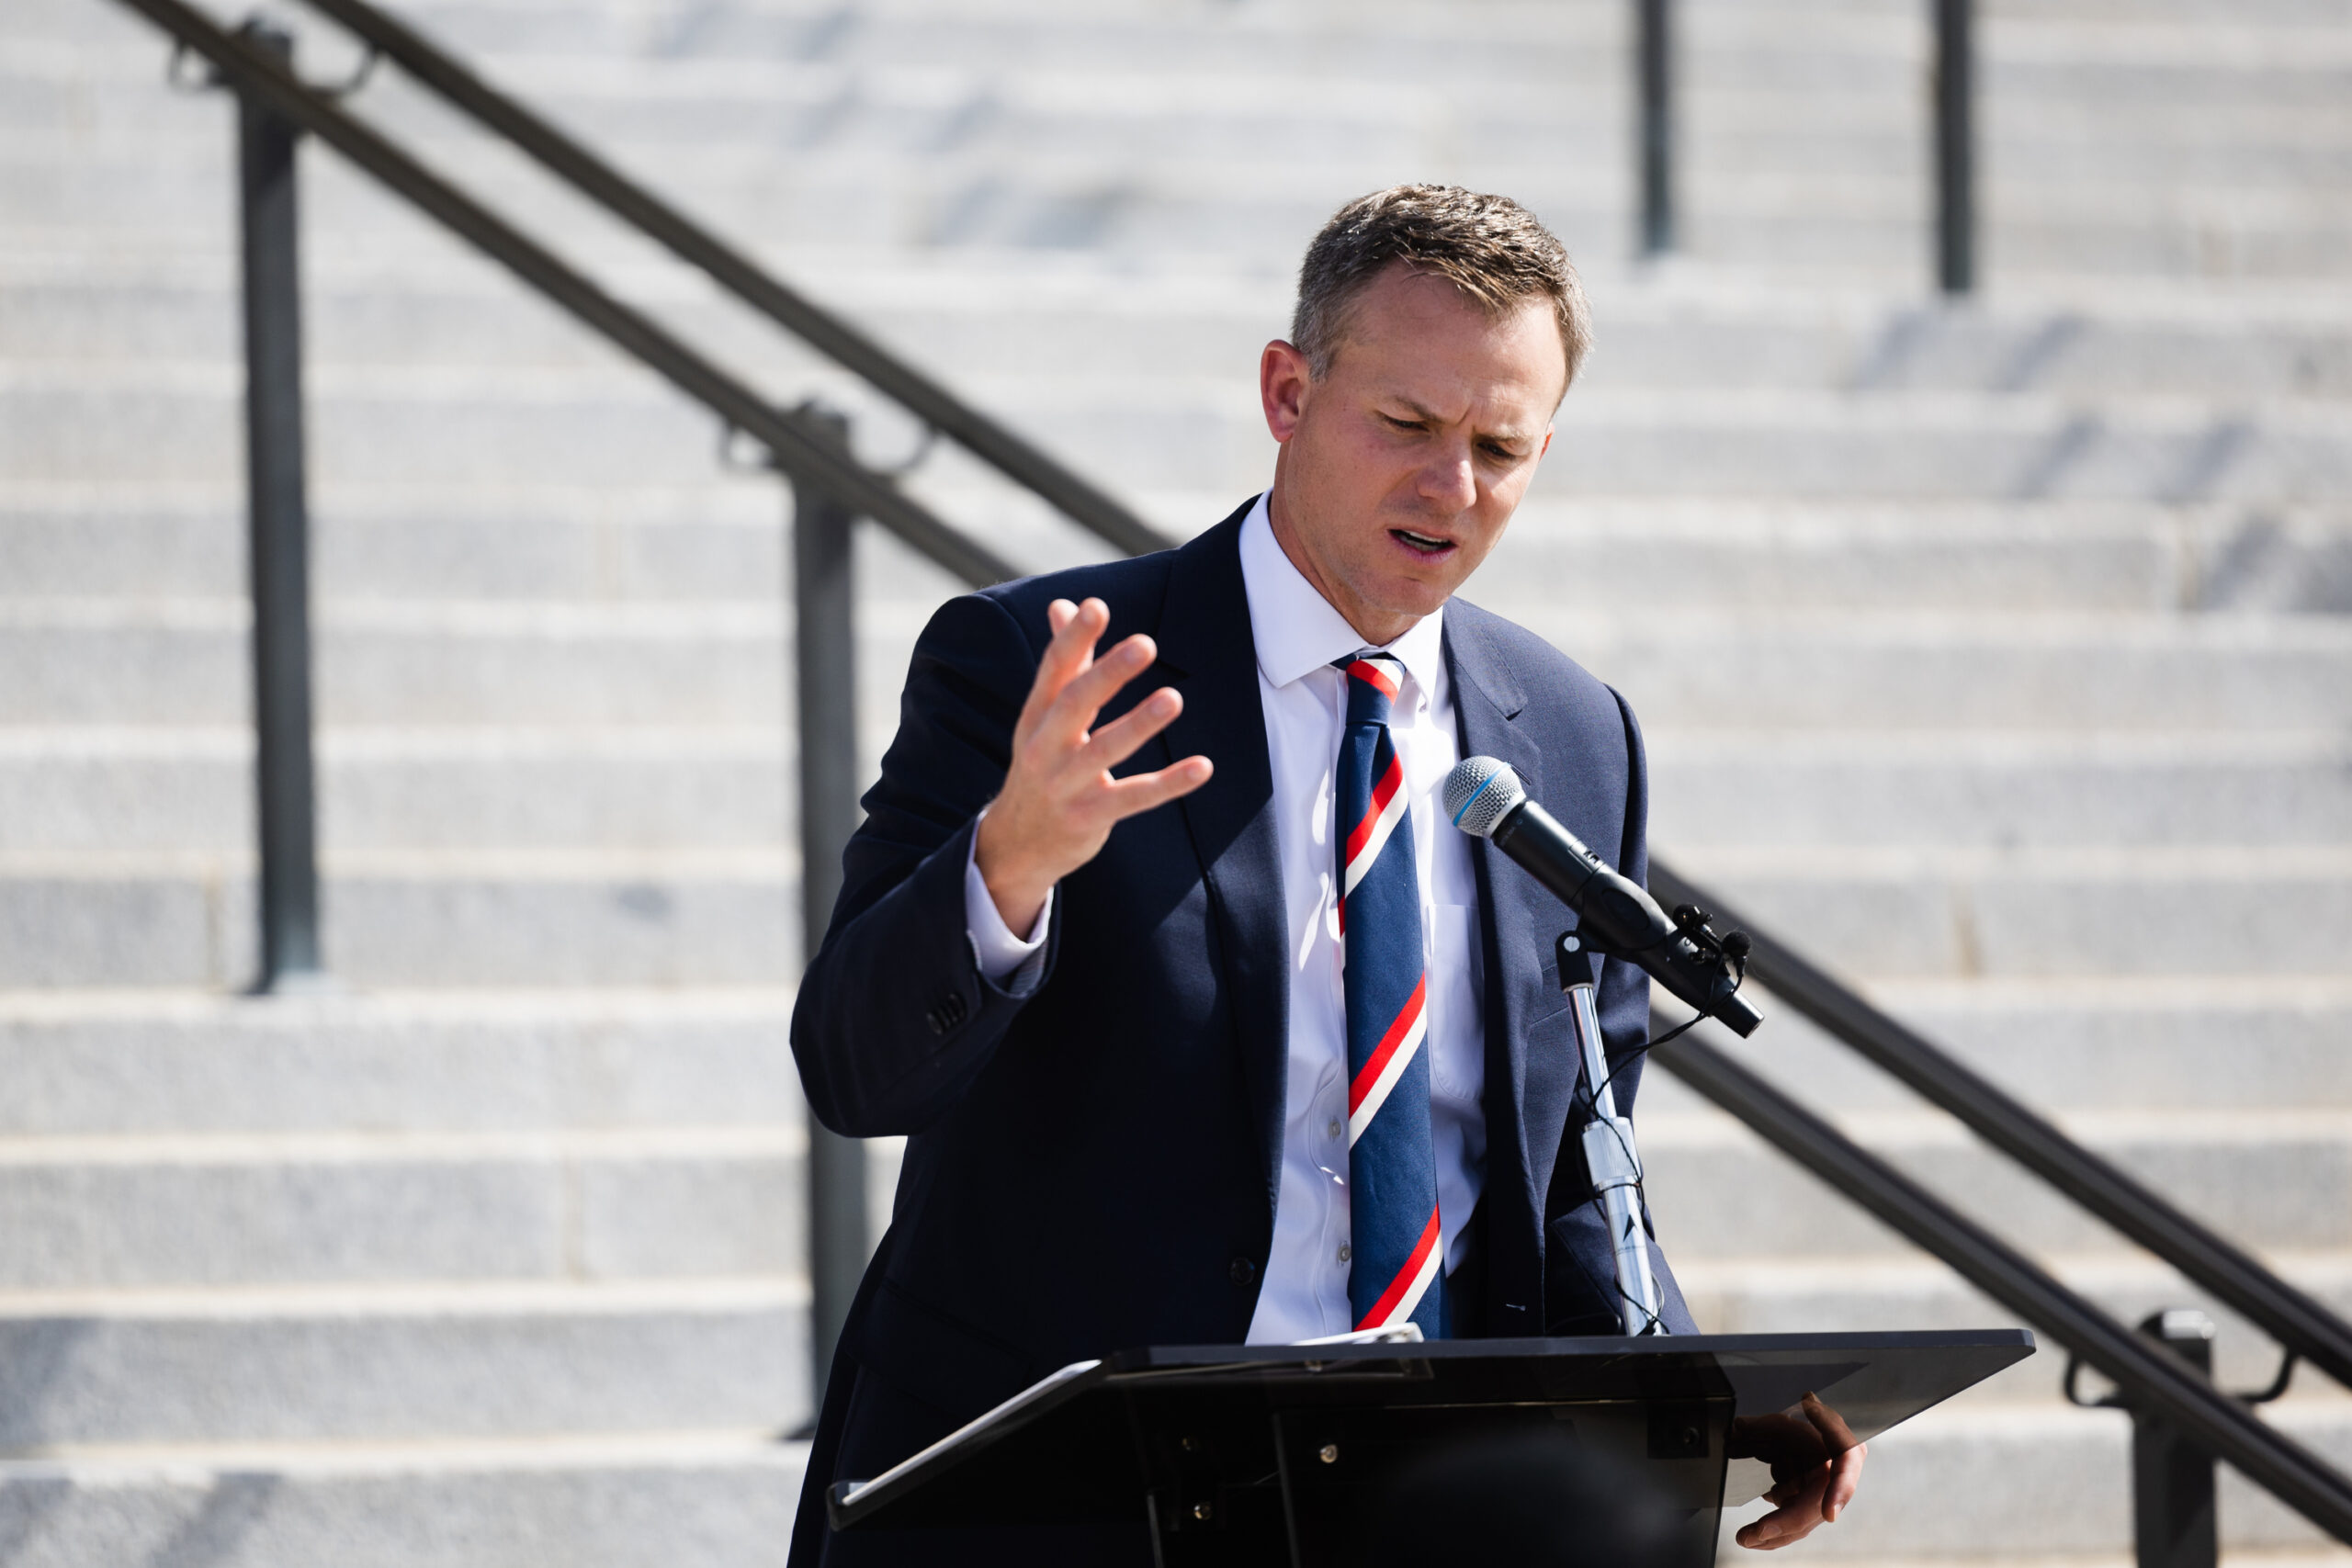 Rep. Blake Moore, R-Utah, speaks during a Memorial Day commemoration event at the Capitol in Salt L...